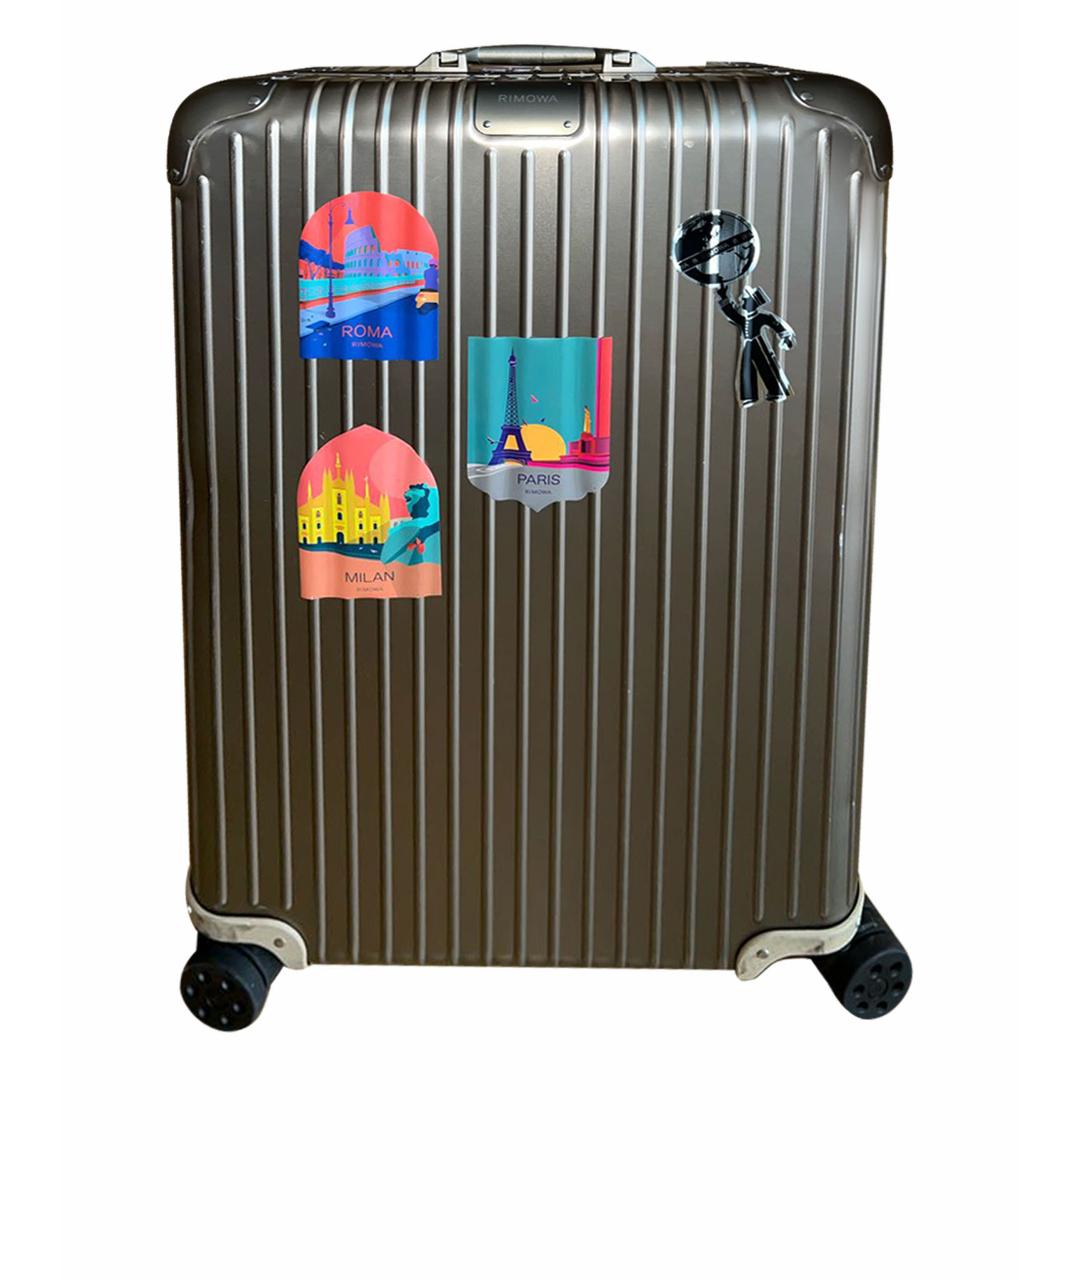 Rimowa Золотой чемодан, фото 1